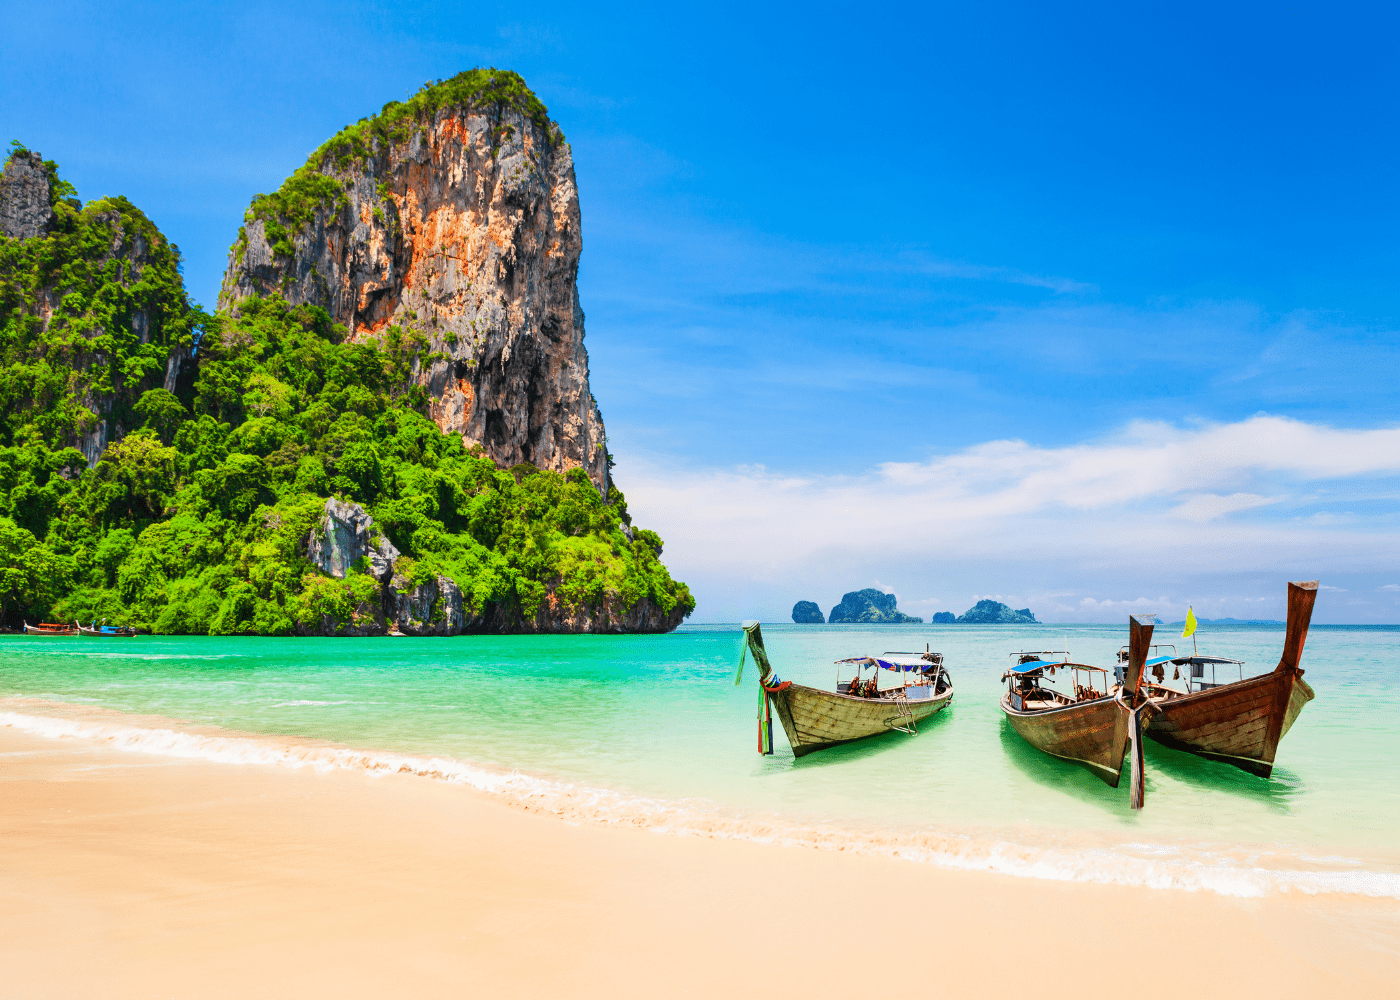 Thailand - Koh Samui Island